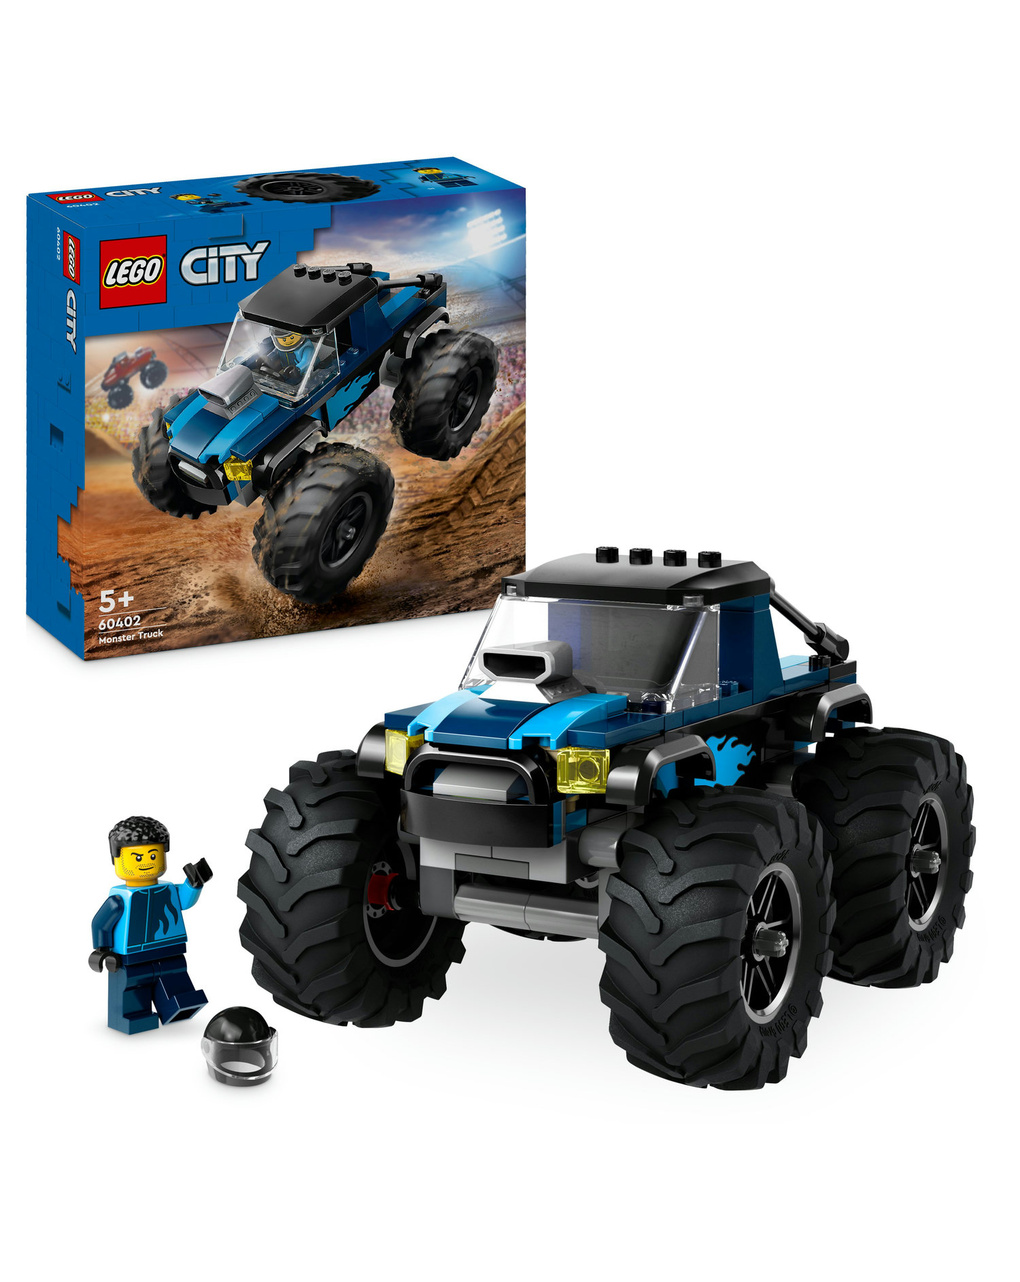 Monster truck azul - 60402 - lego city - LEGO